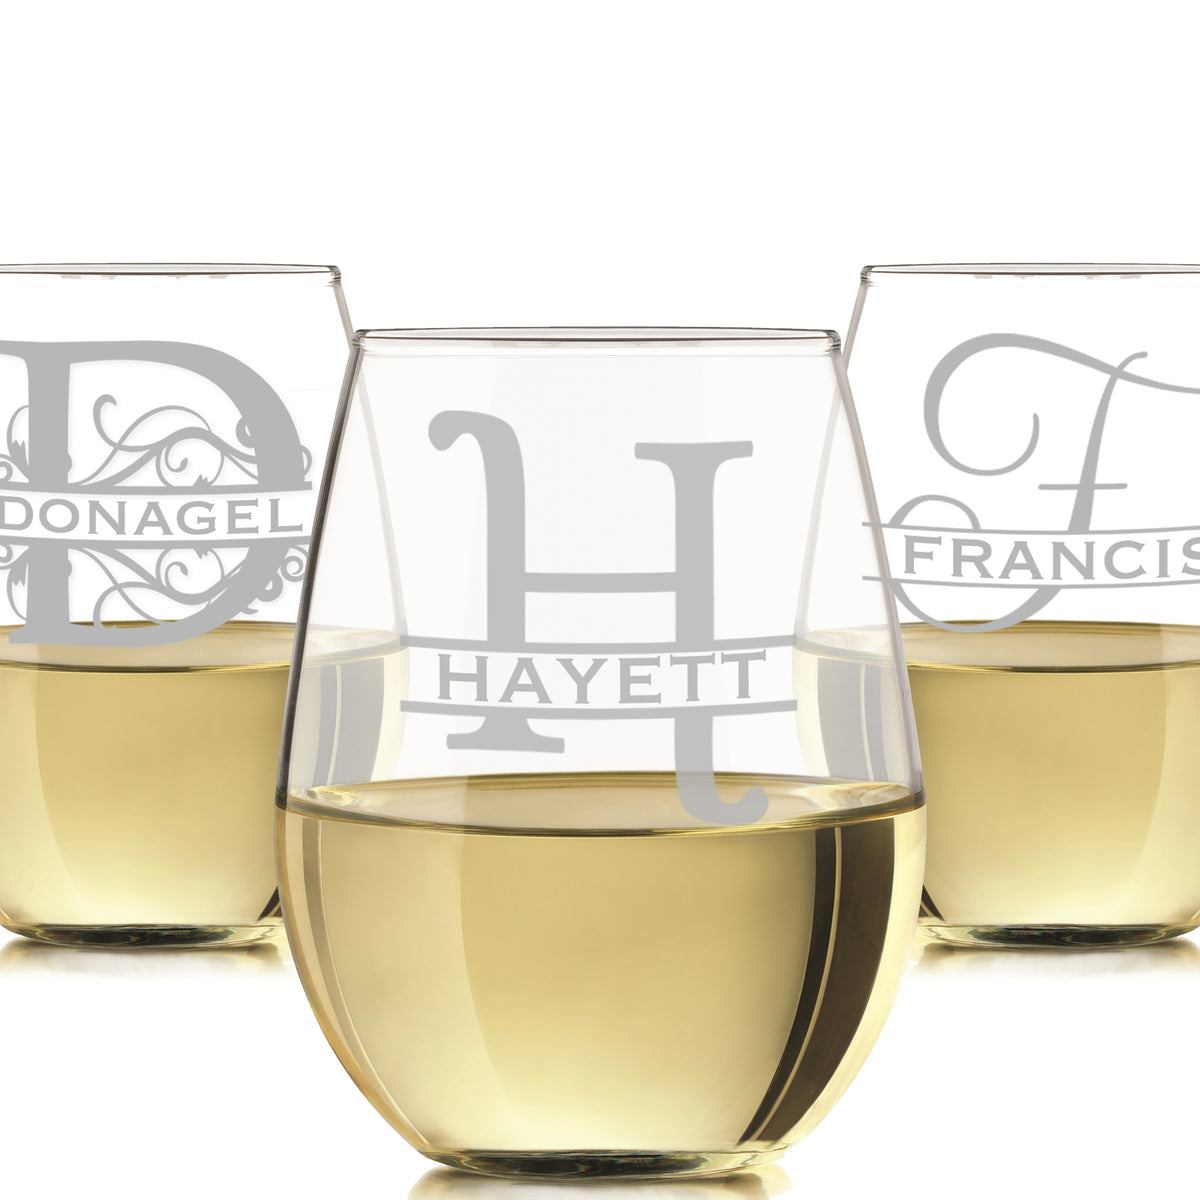 Monogram wine glasses, Personalized stemless wine glass, Wedding glasses, Engraved Wine Glass 20oz./personalized wine glass, engraved wine